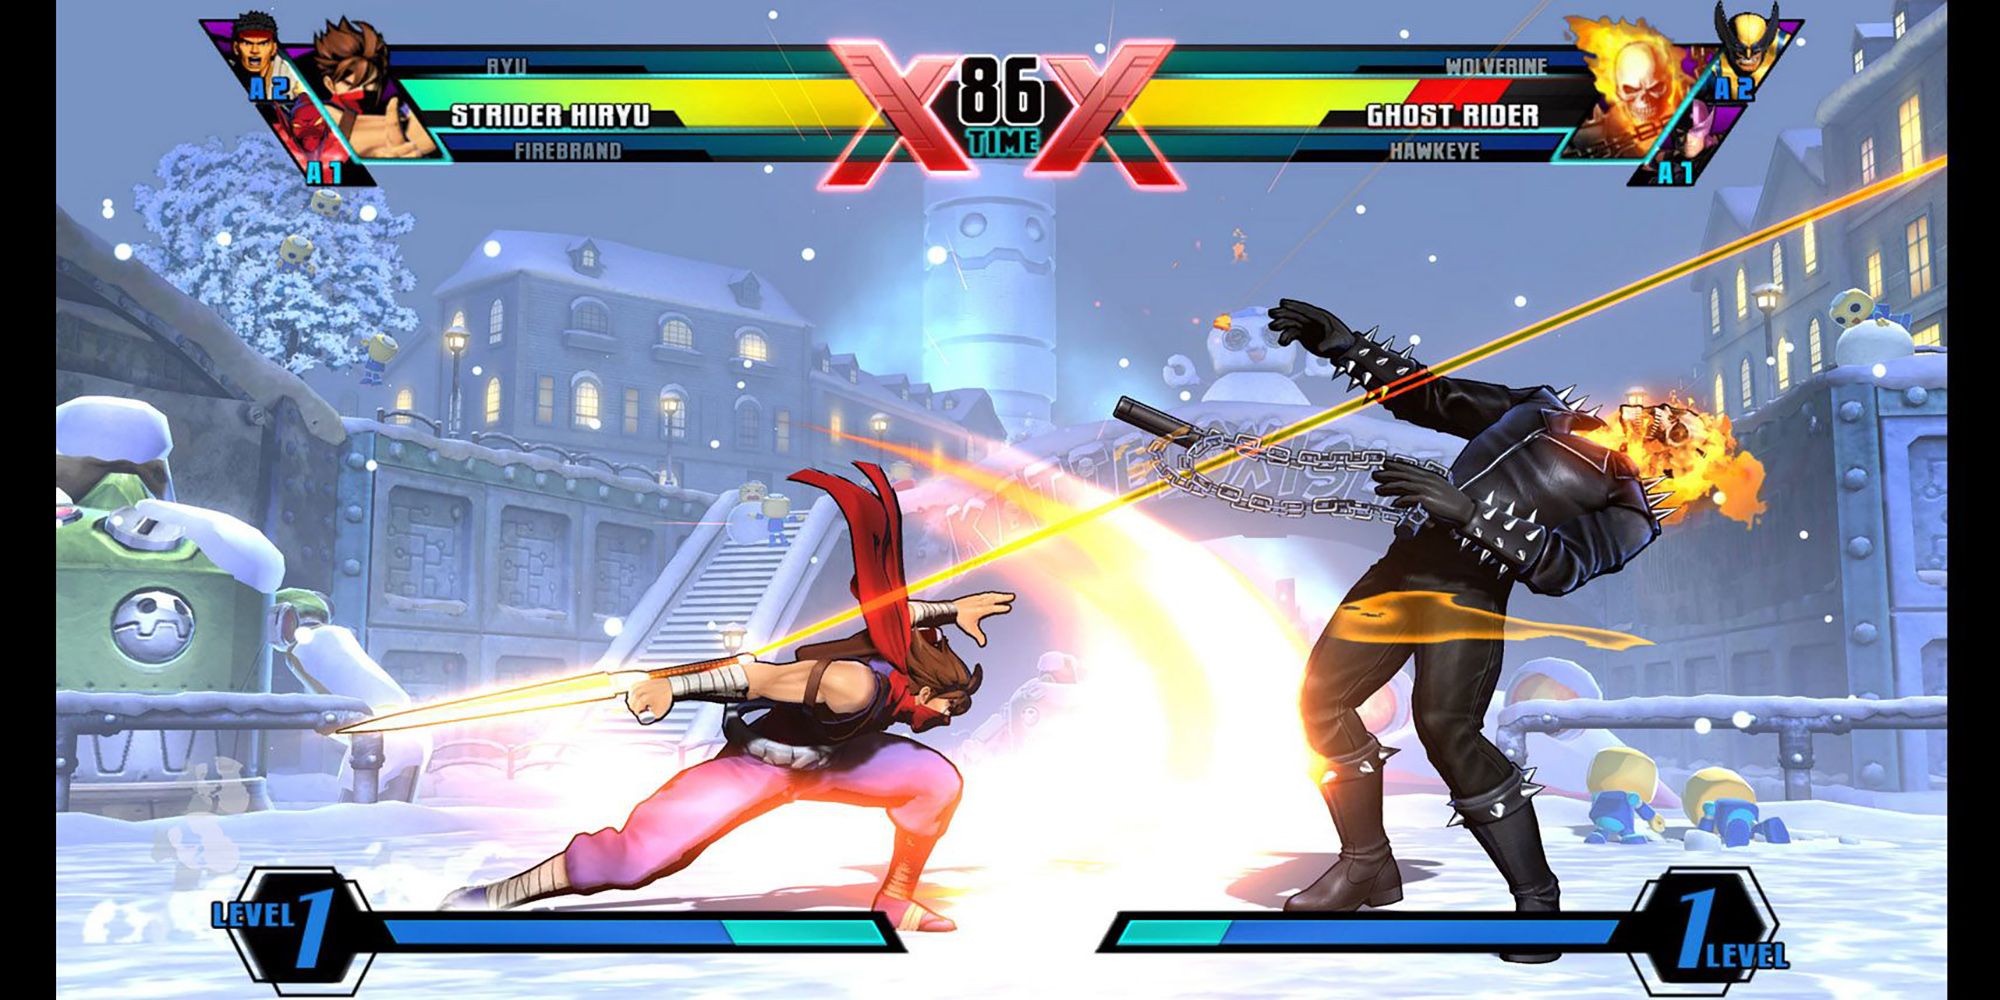 Strider Hiryu strikes Ghost Rider in a battle at T Bonne's winter wonderland in Ultimate Marvel vs. Capcom 3.